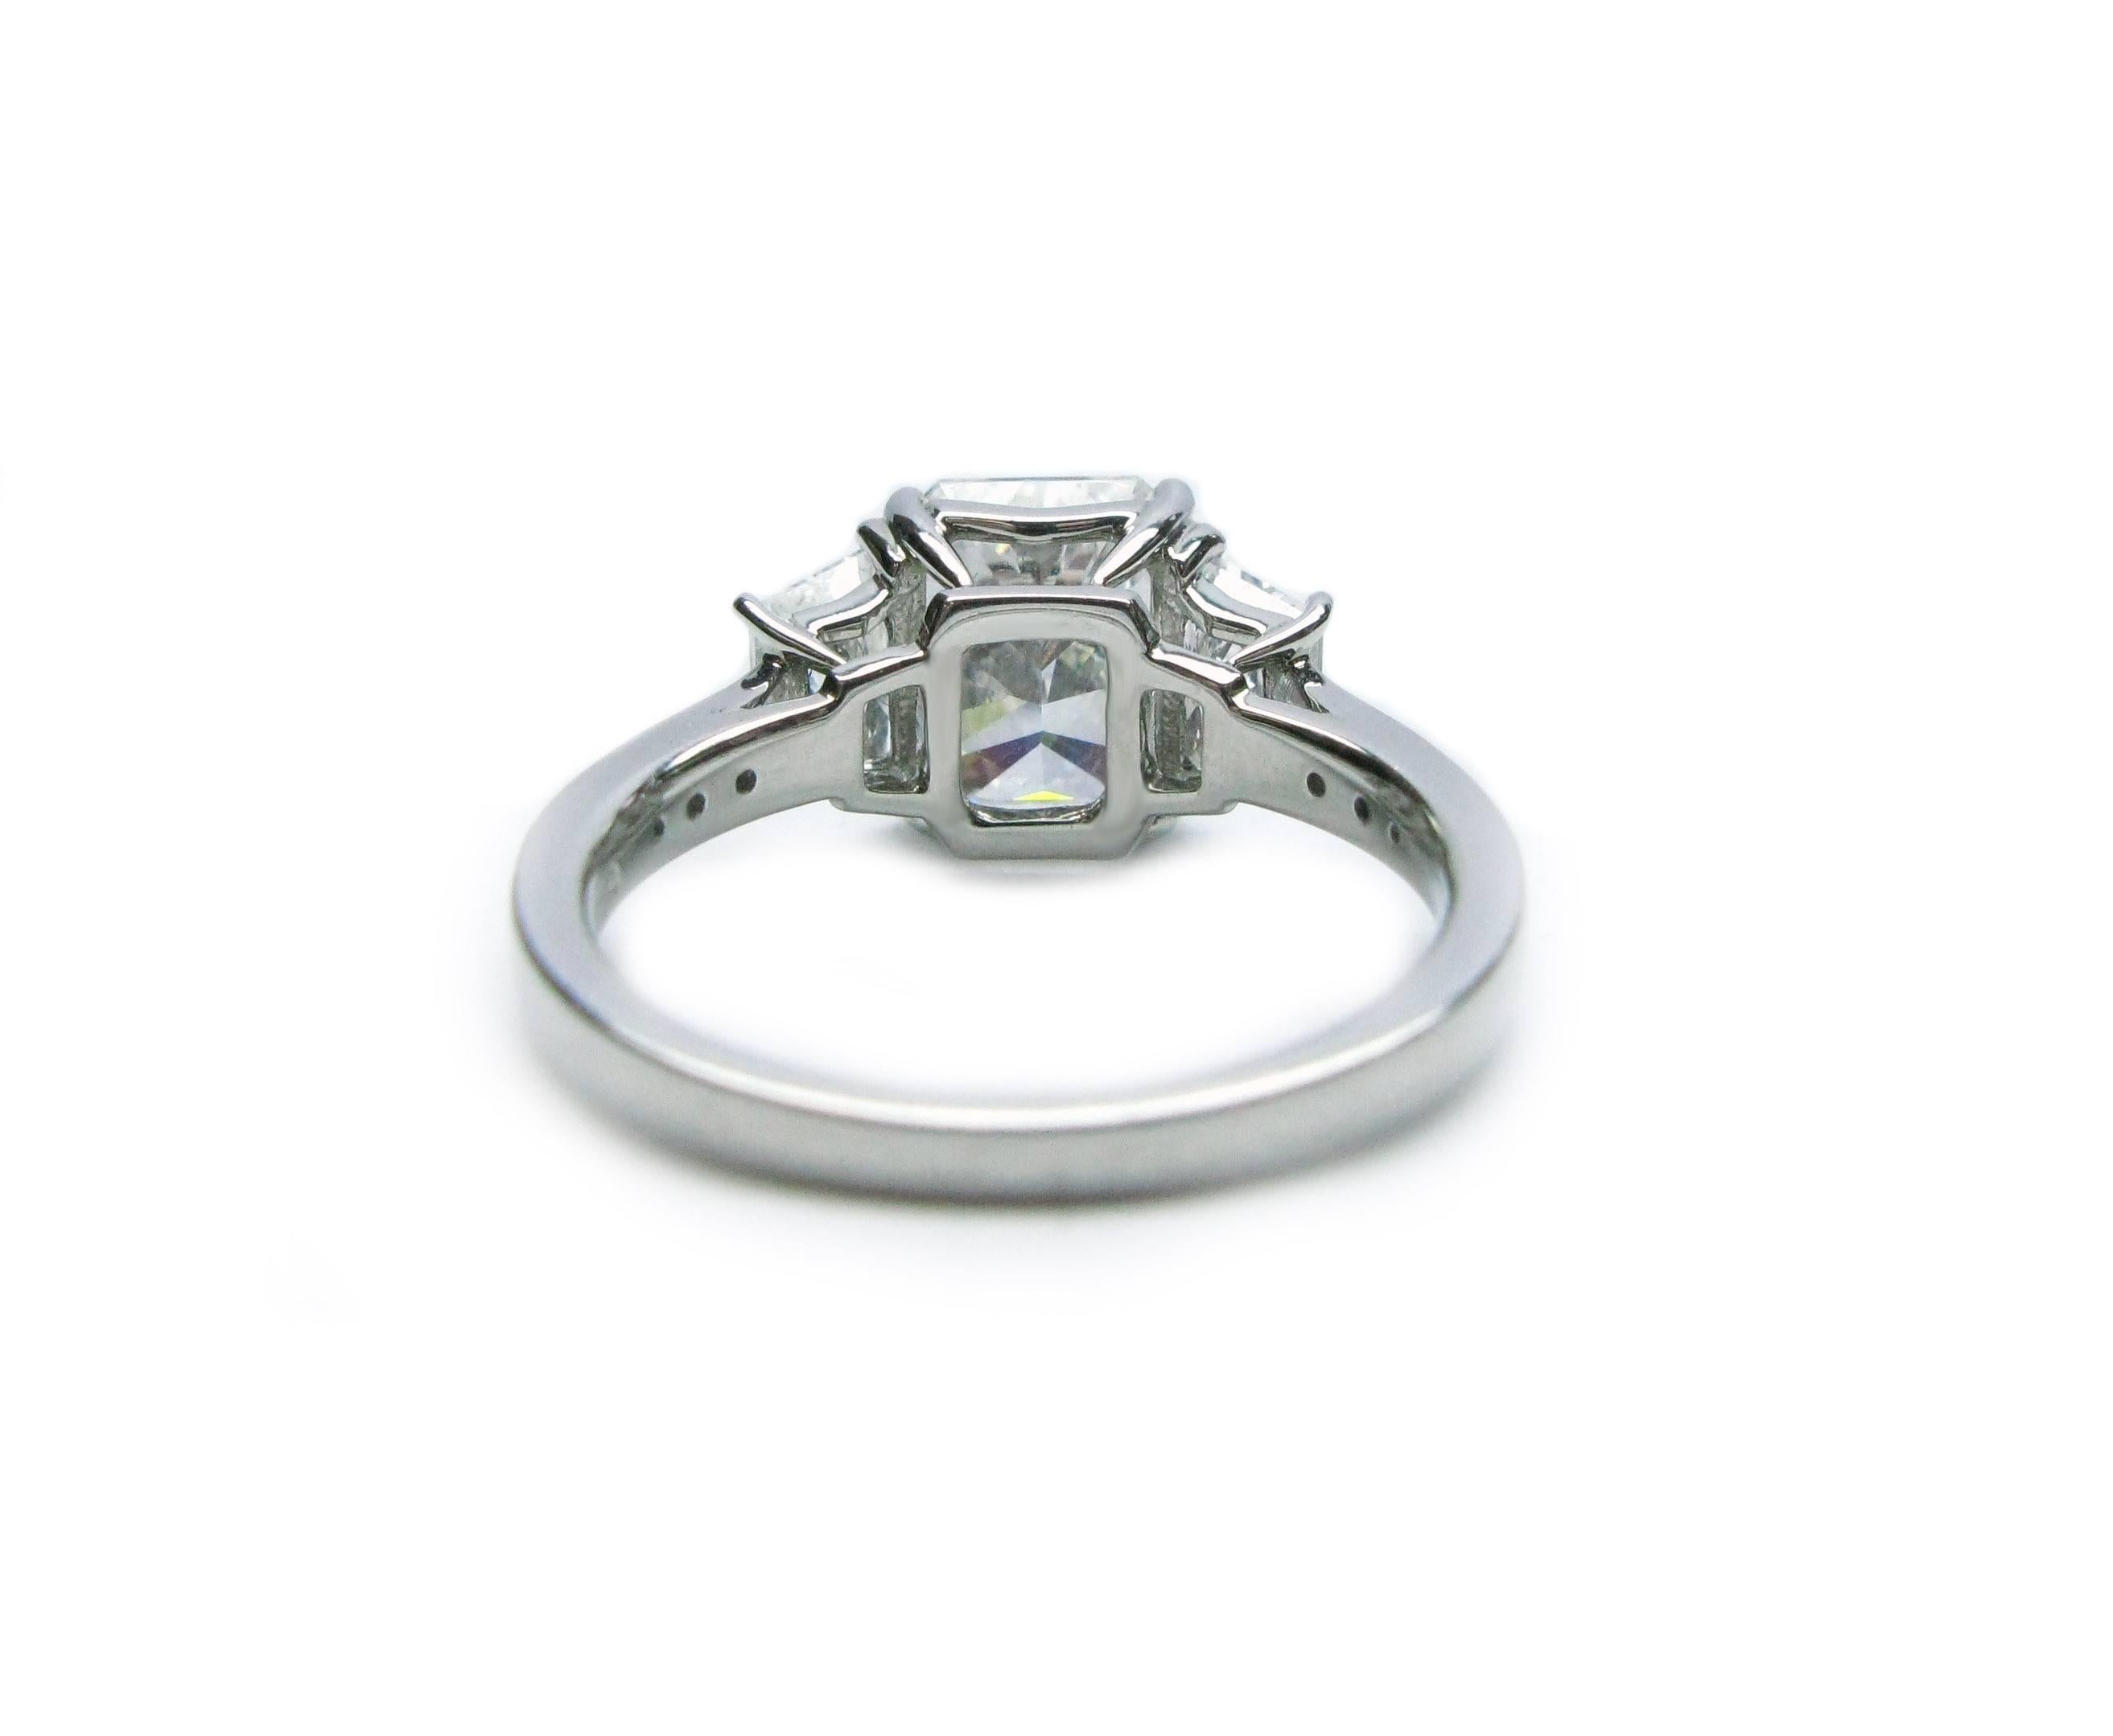 3 carat flawless diamond ring